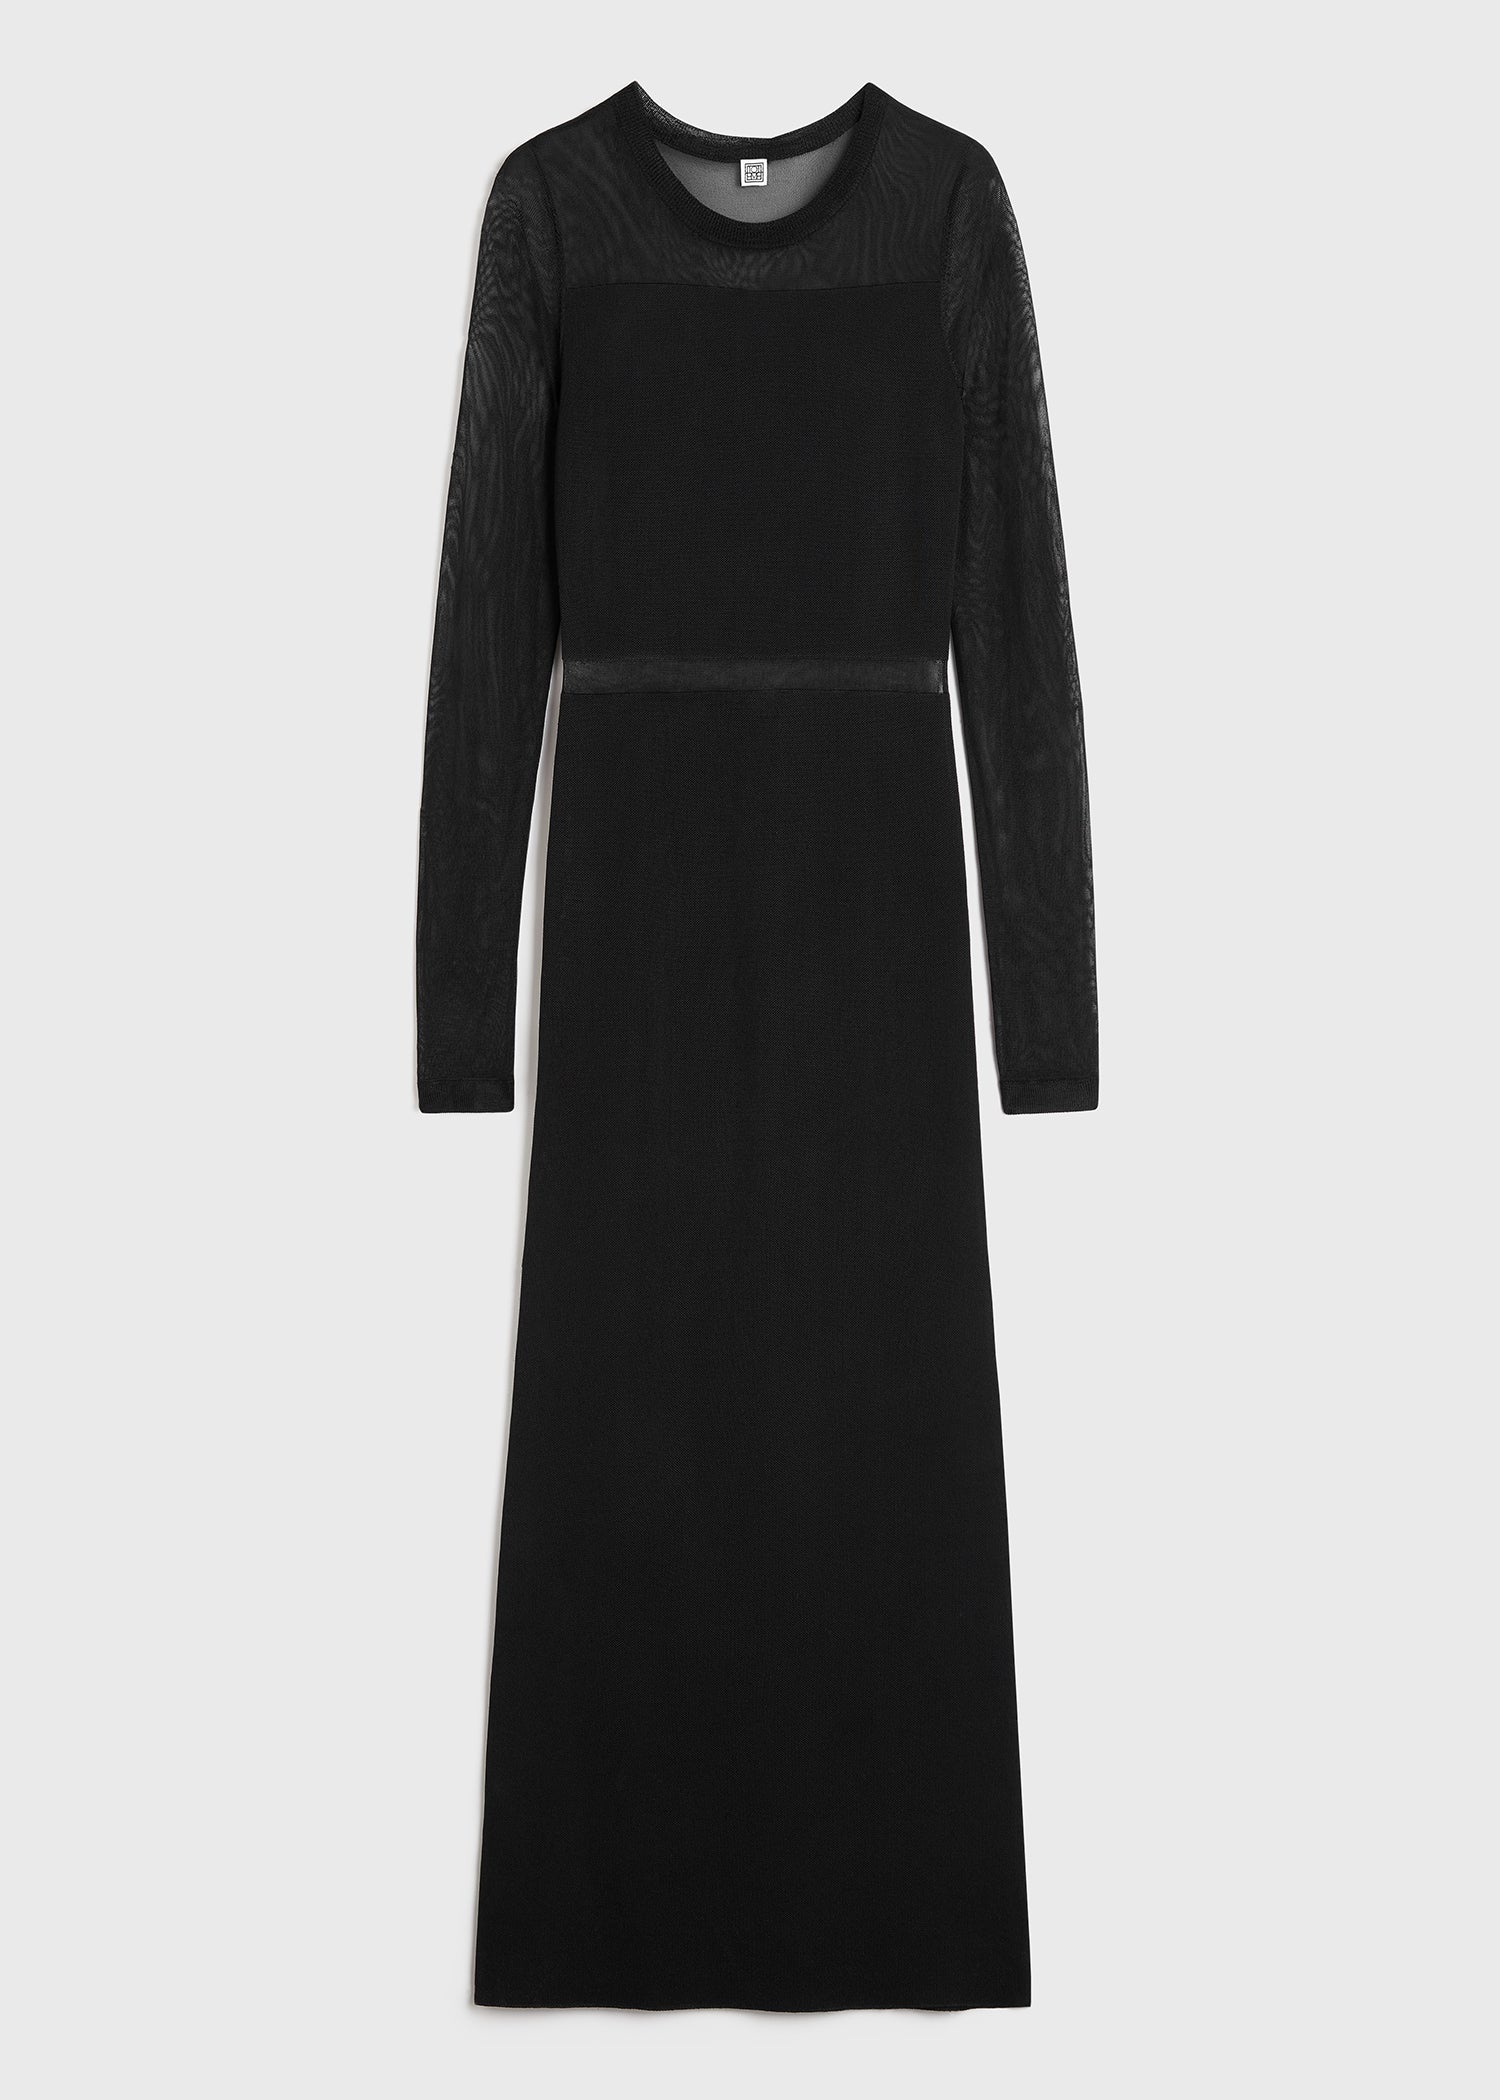 Semi-sheer knitted cocktail dress black - 1